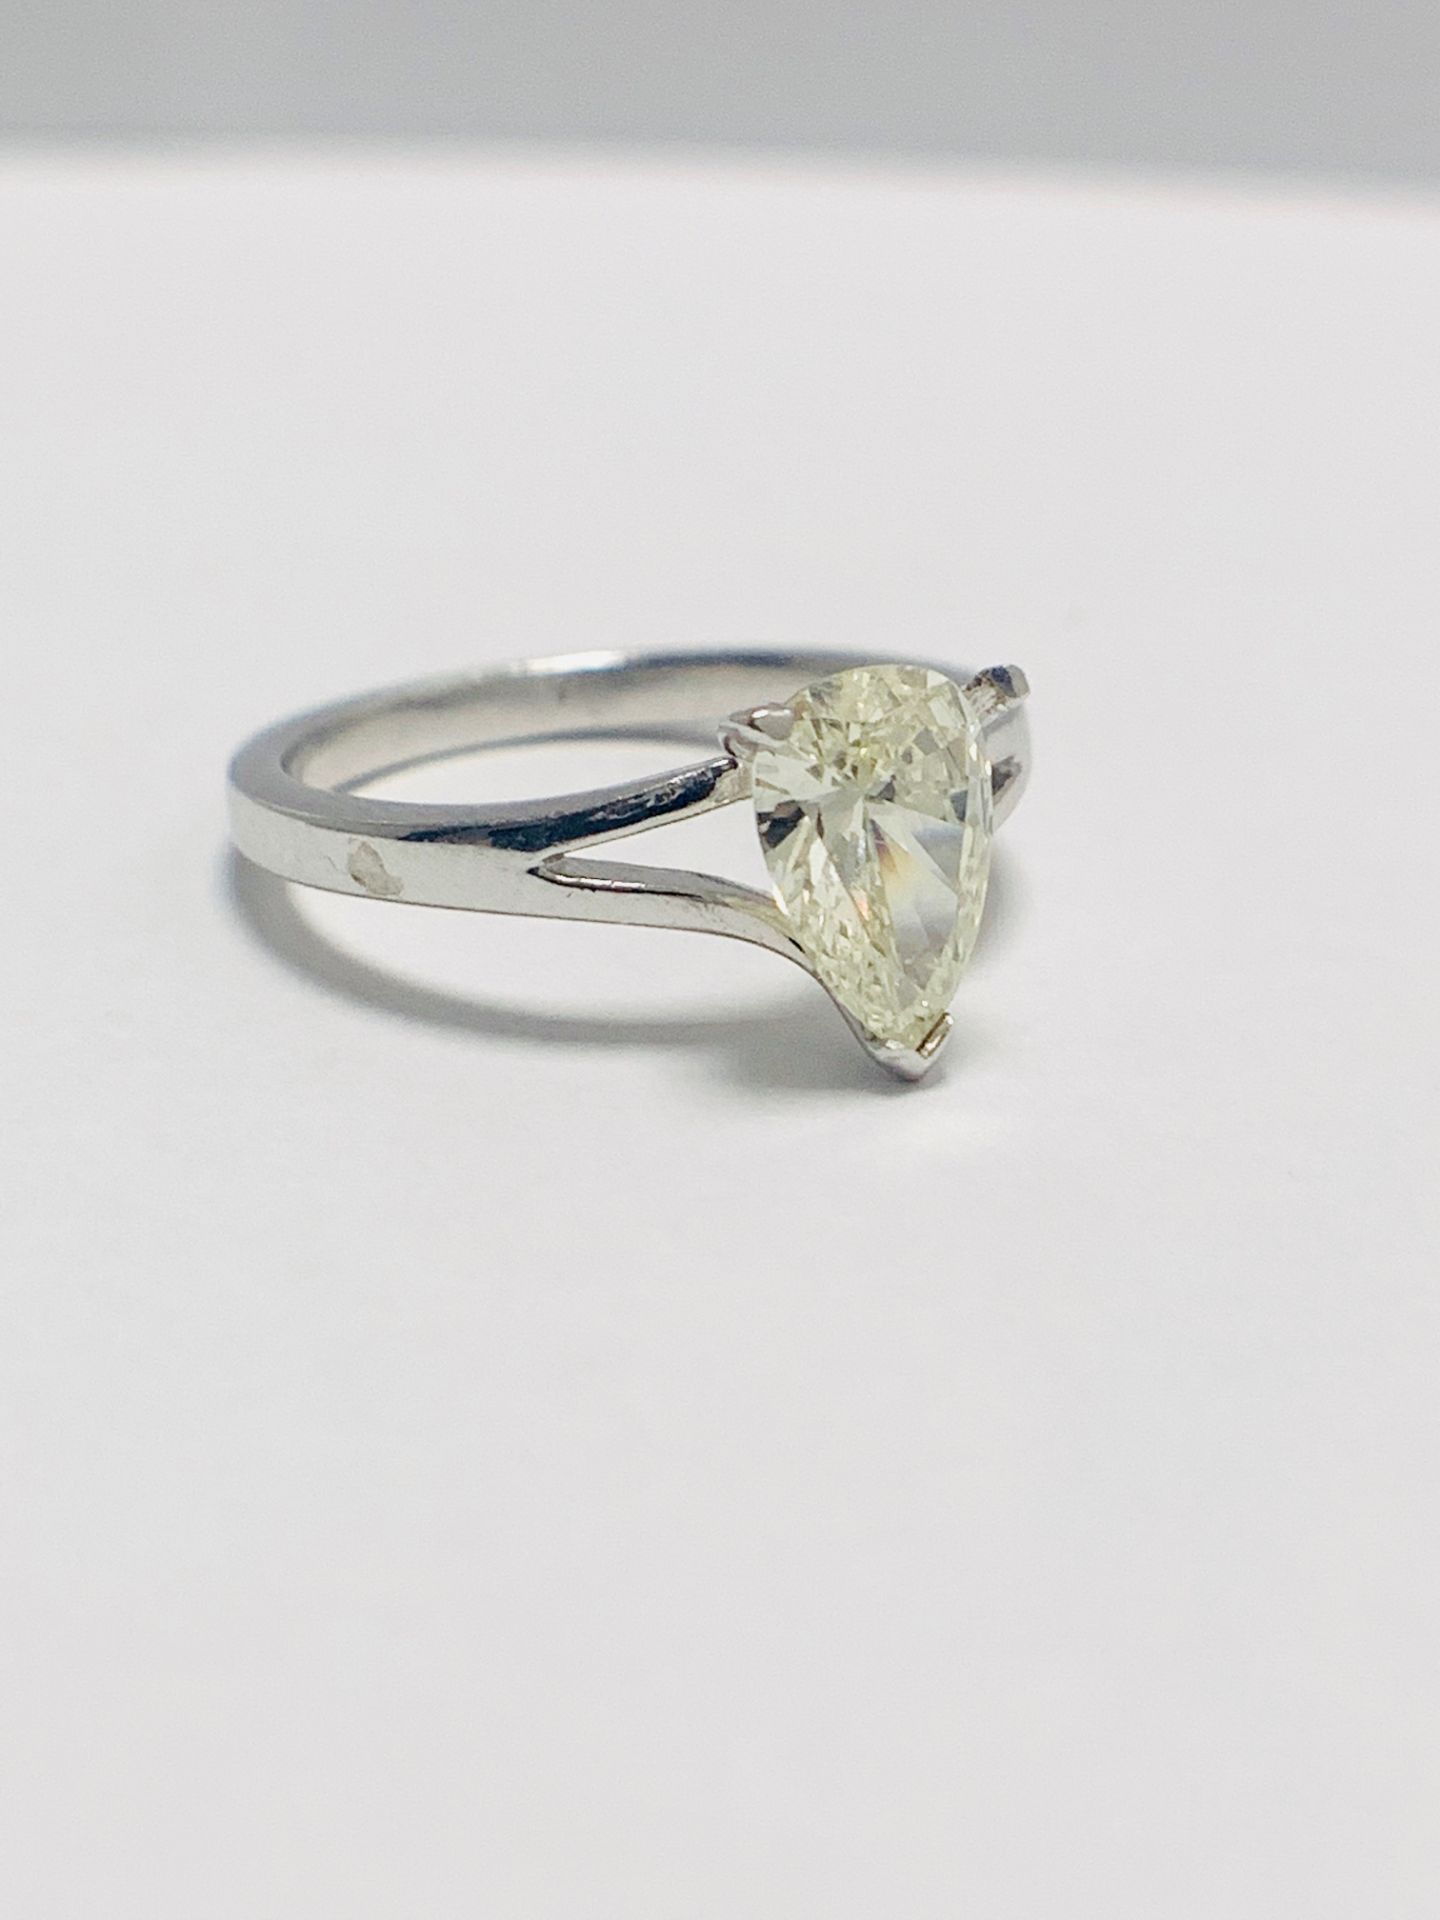 1Ct Pearshape Diamond Platinum Solitaire Ring. - Image 7 of 9